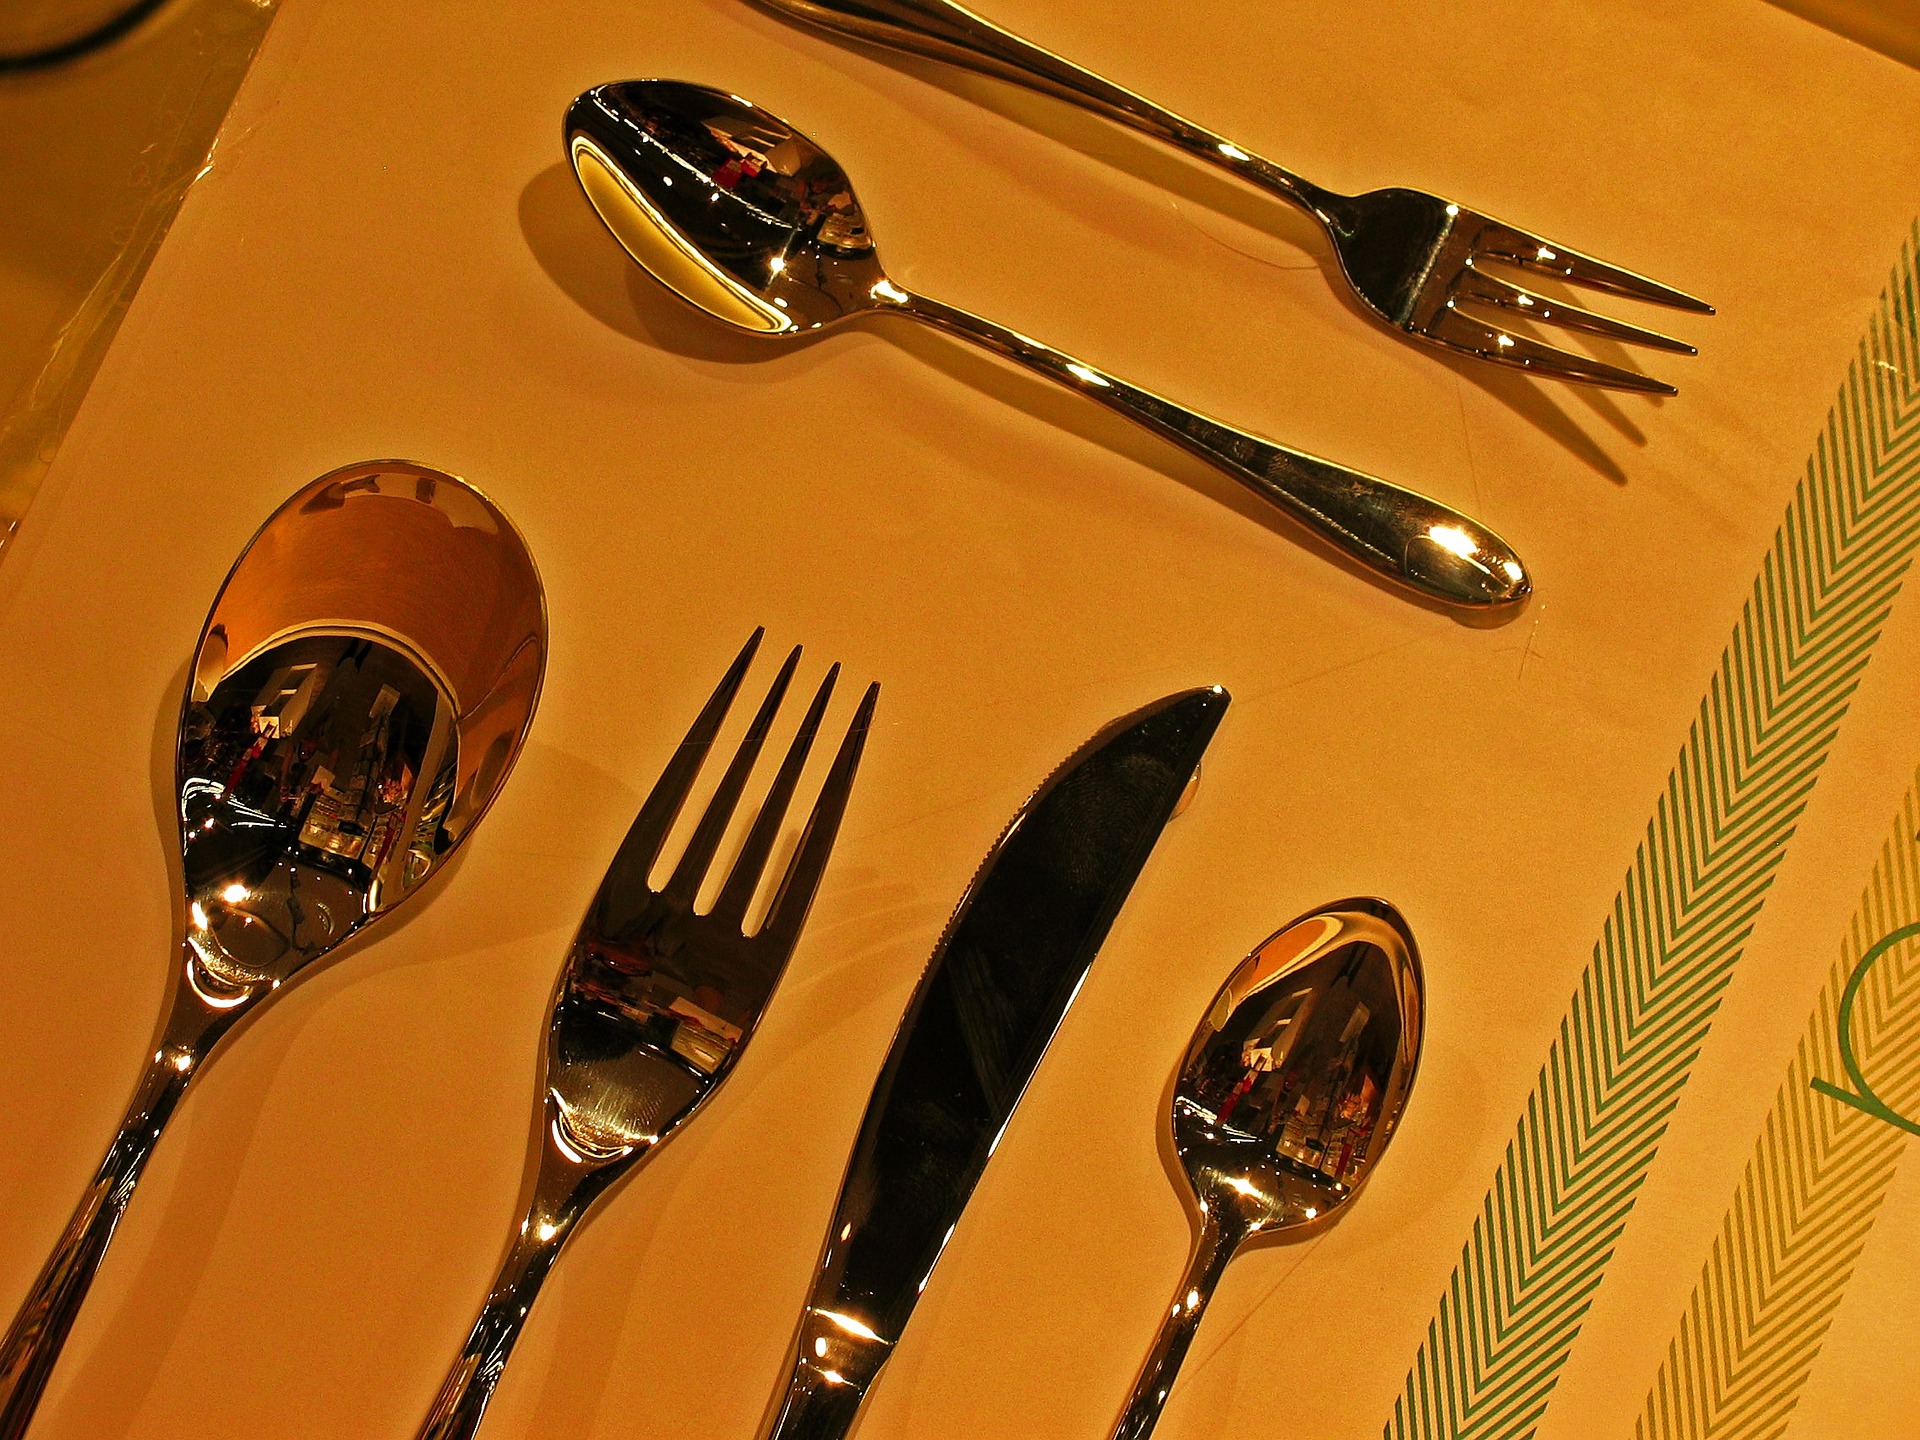 4 Main Types of Tableware